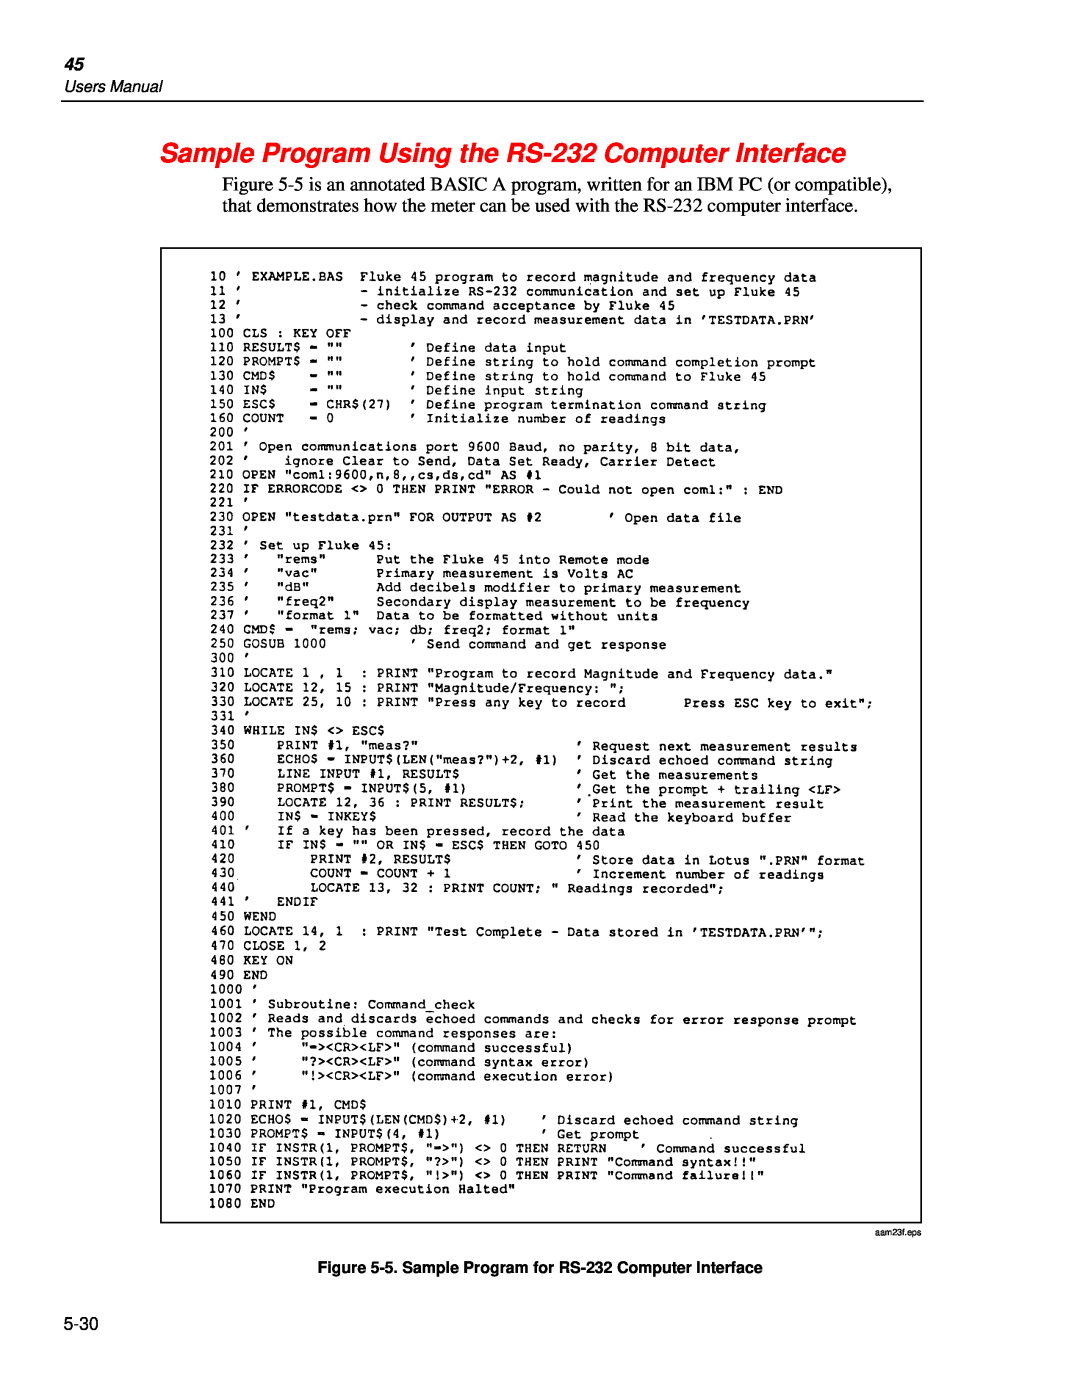 Fluke 45 user manual Sample Program Using the RS-232Computer Interface, 5-30, Users Manual, aam23f.eps 